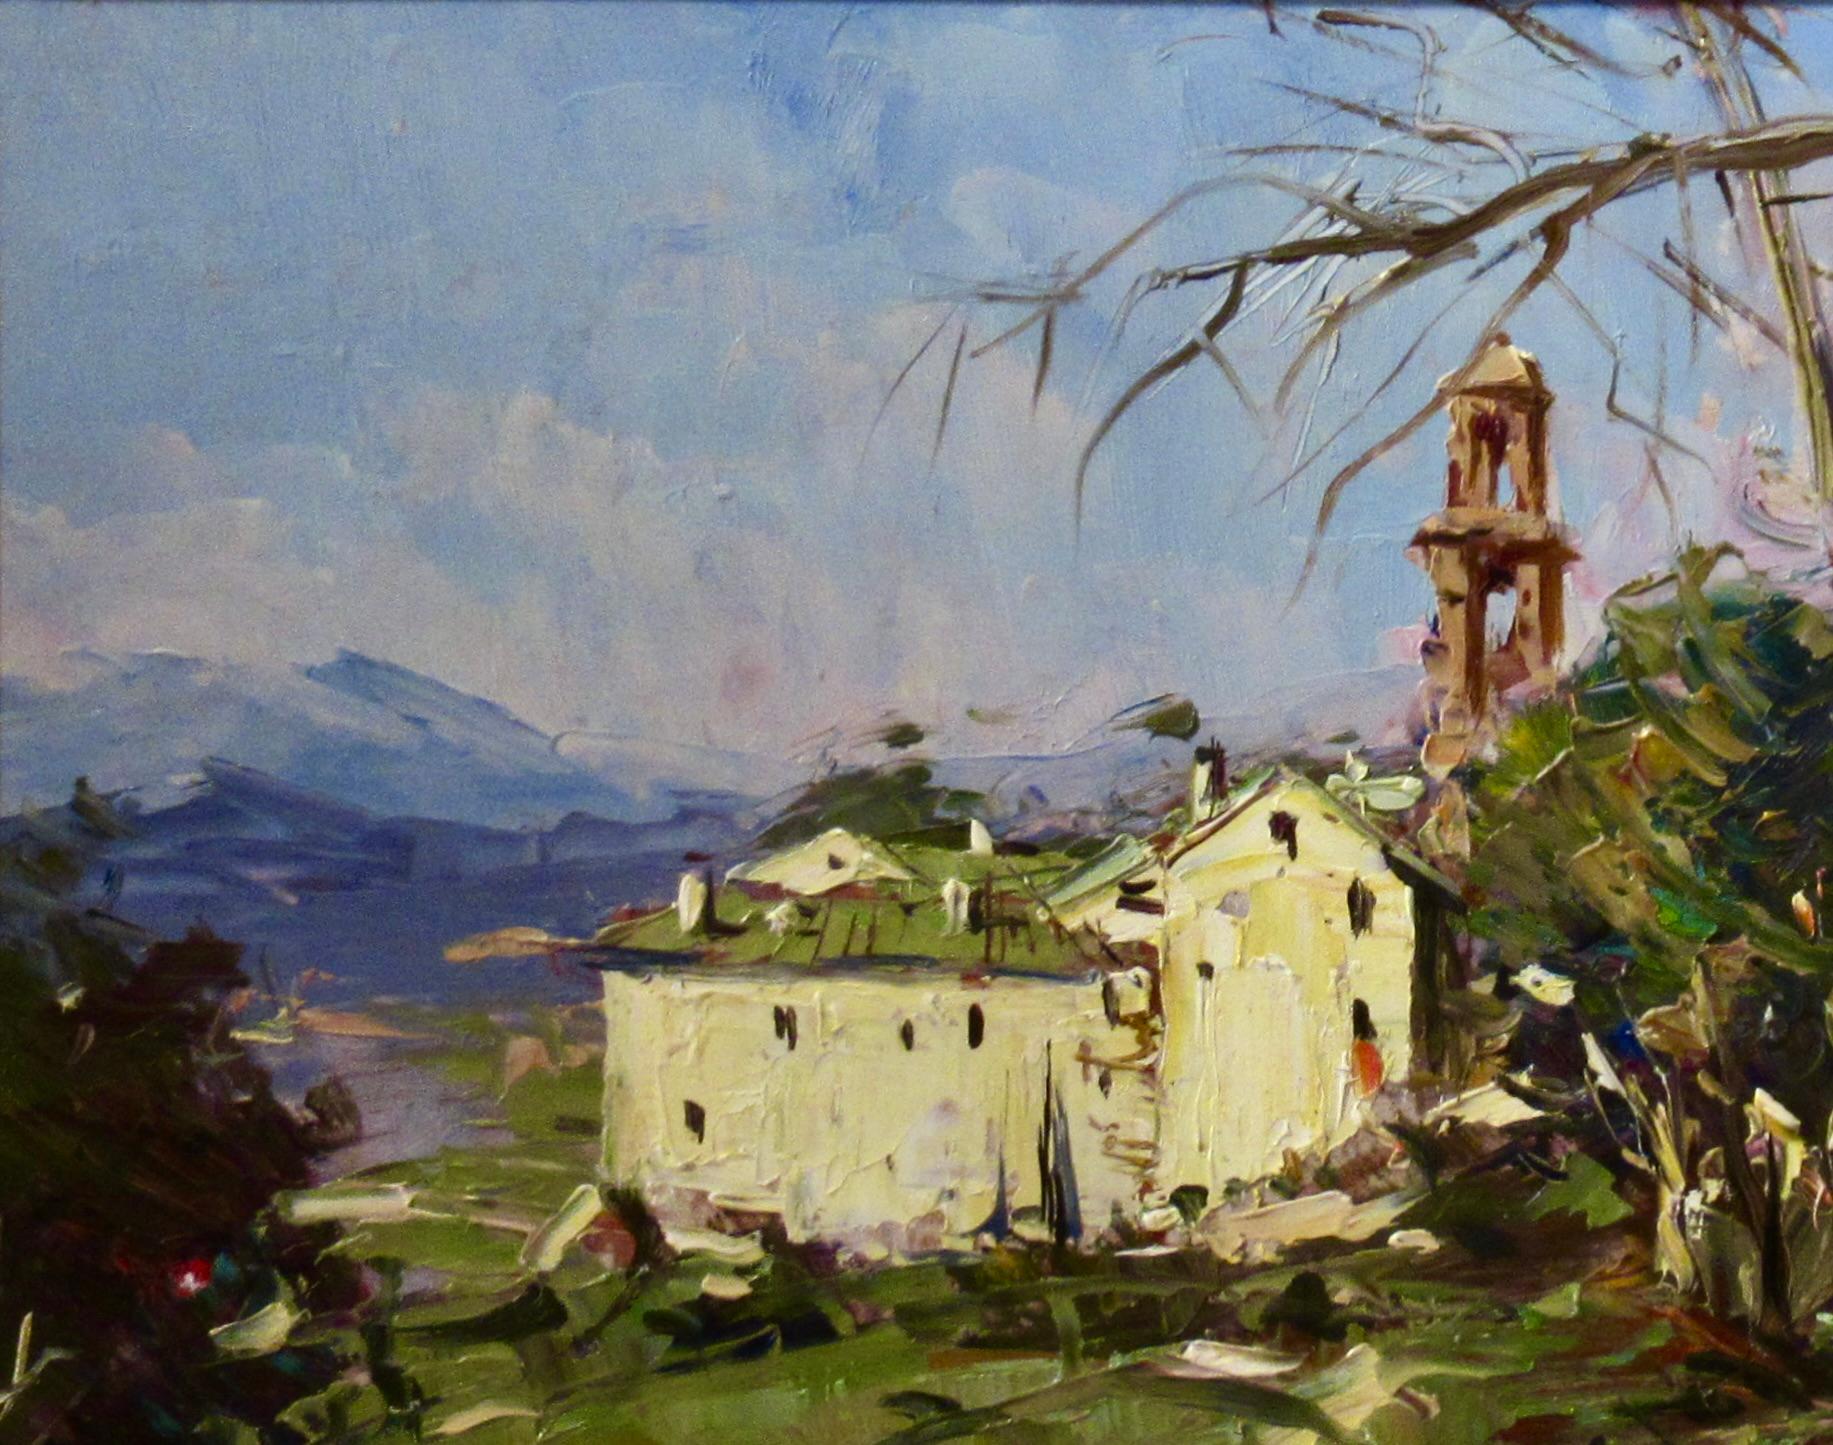 Corse (Corsica) - Impressionist Painting by Tony Cardella